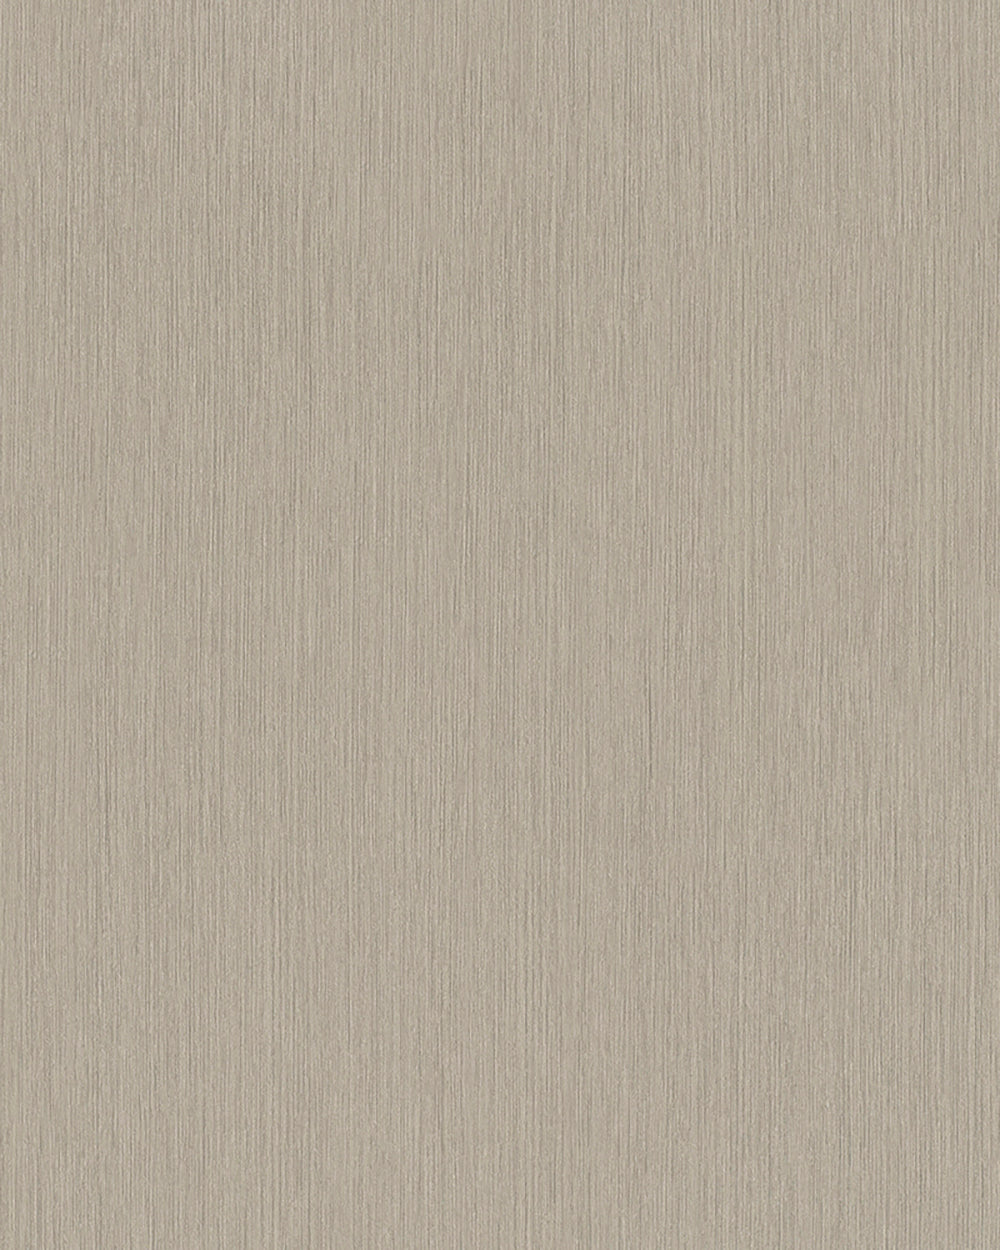 Modernista - Modern Plain plain wallpaper Marburg Roll Dark Taupe  32216